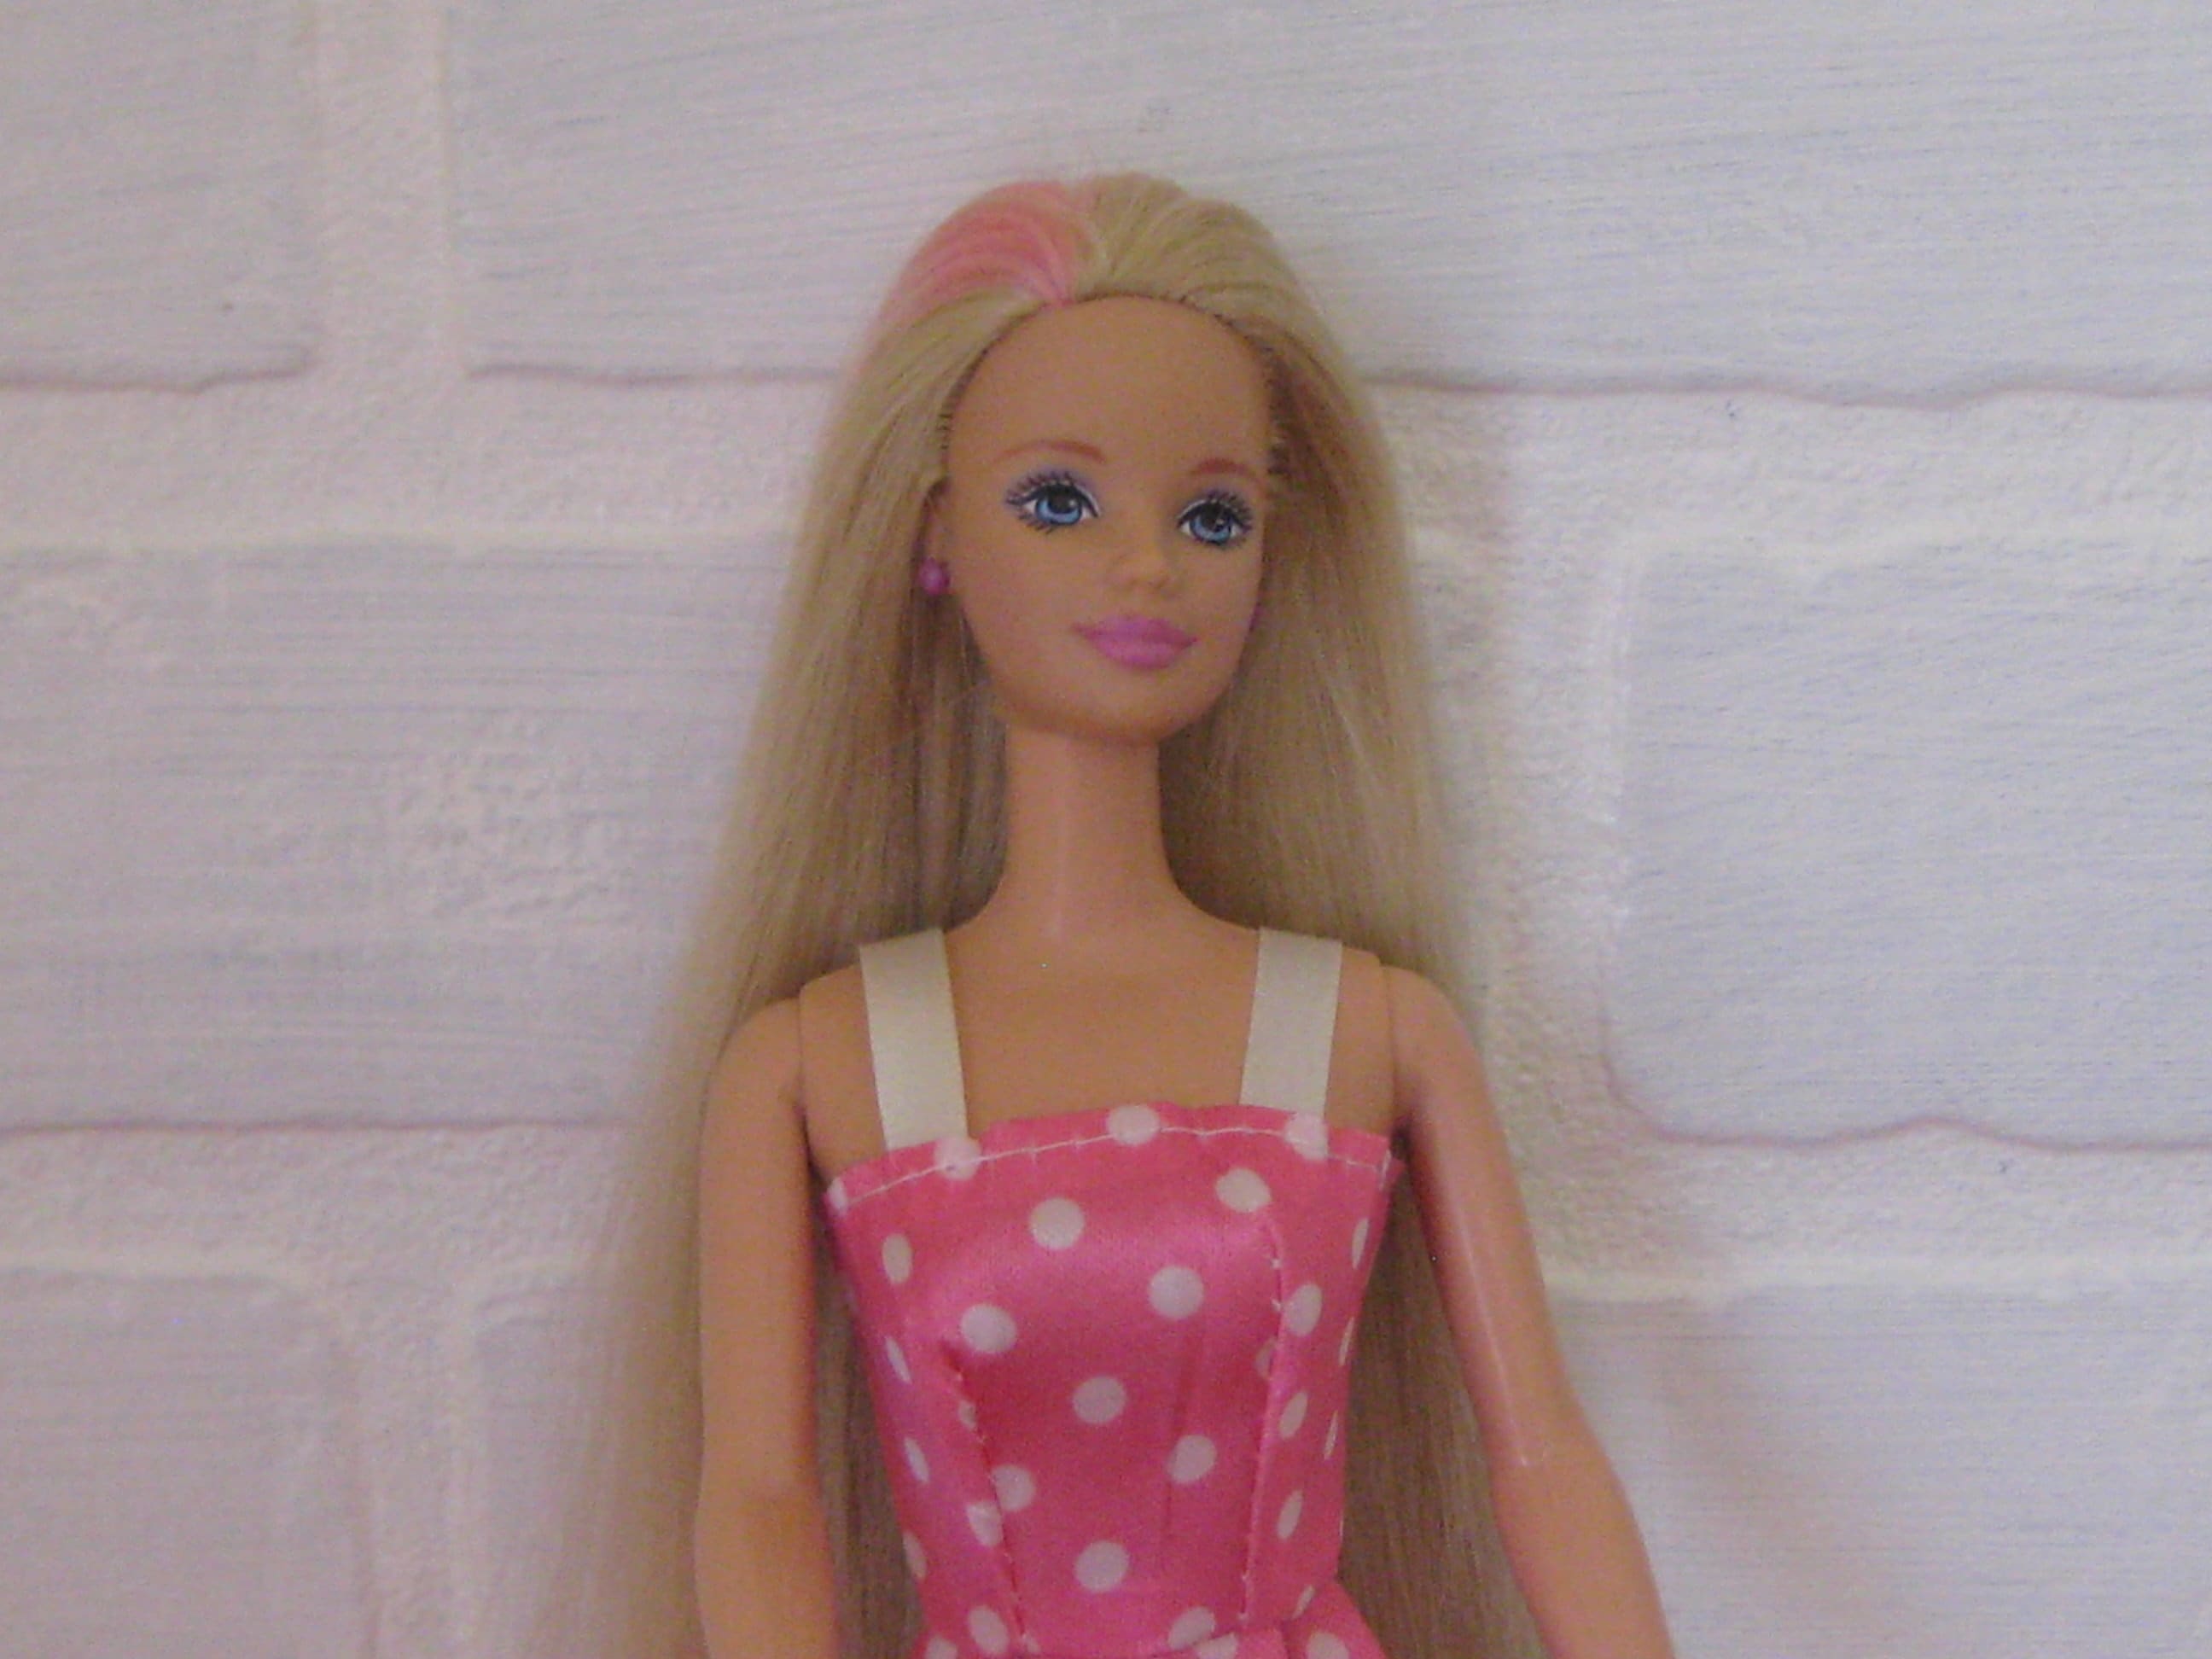 Vintage 1990s Barbie Doll With Blonde Hair and Pink Streaks - Etsy